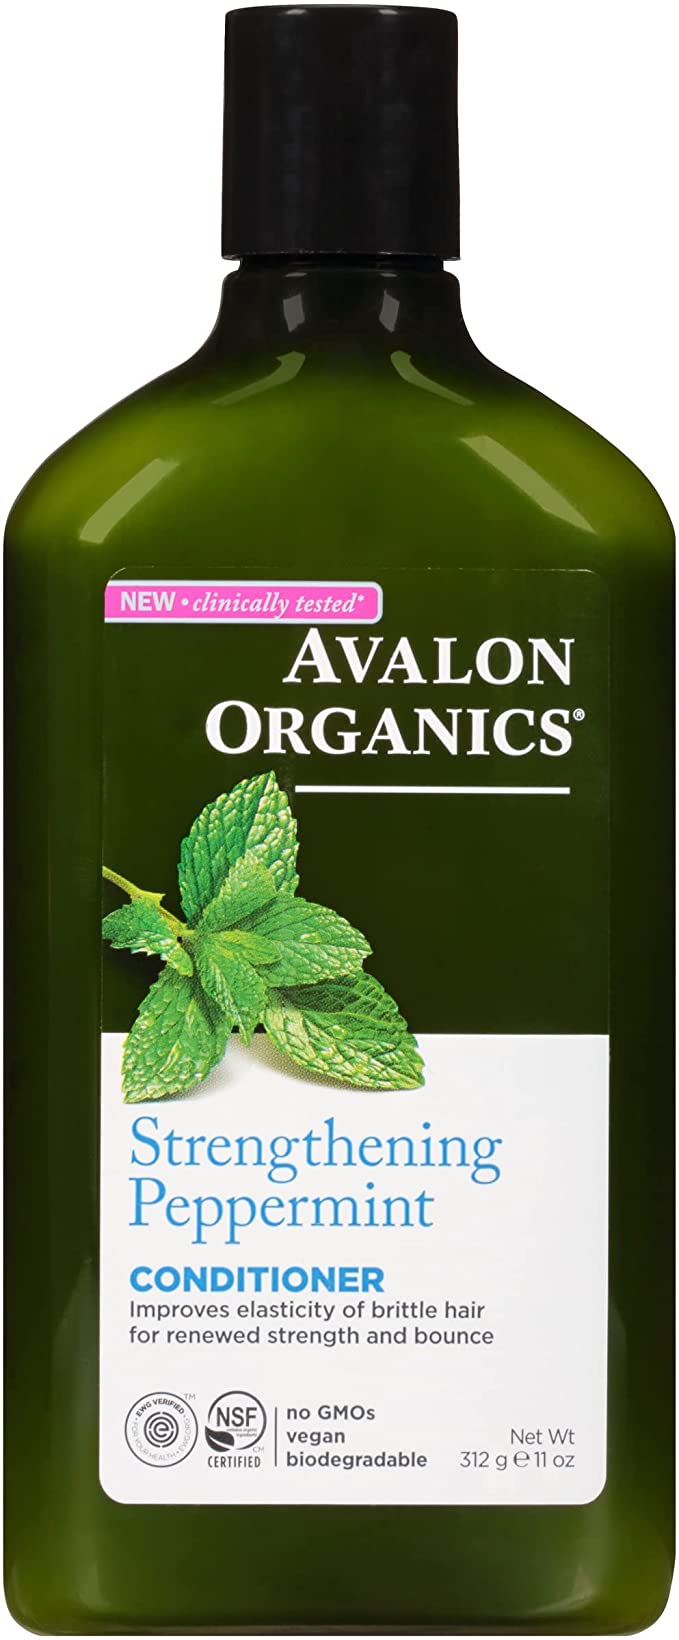 Avalon Organics Peppermint Revitalizing Conditioner, 325ml